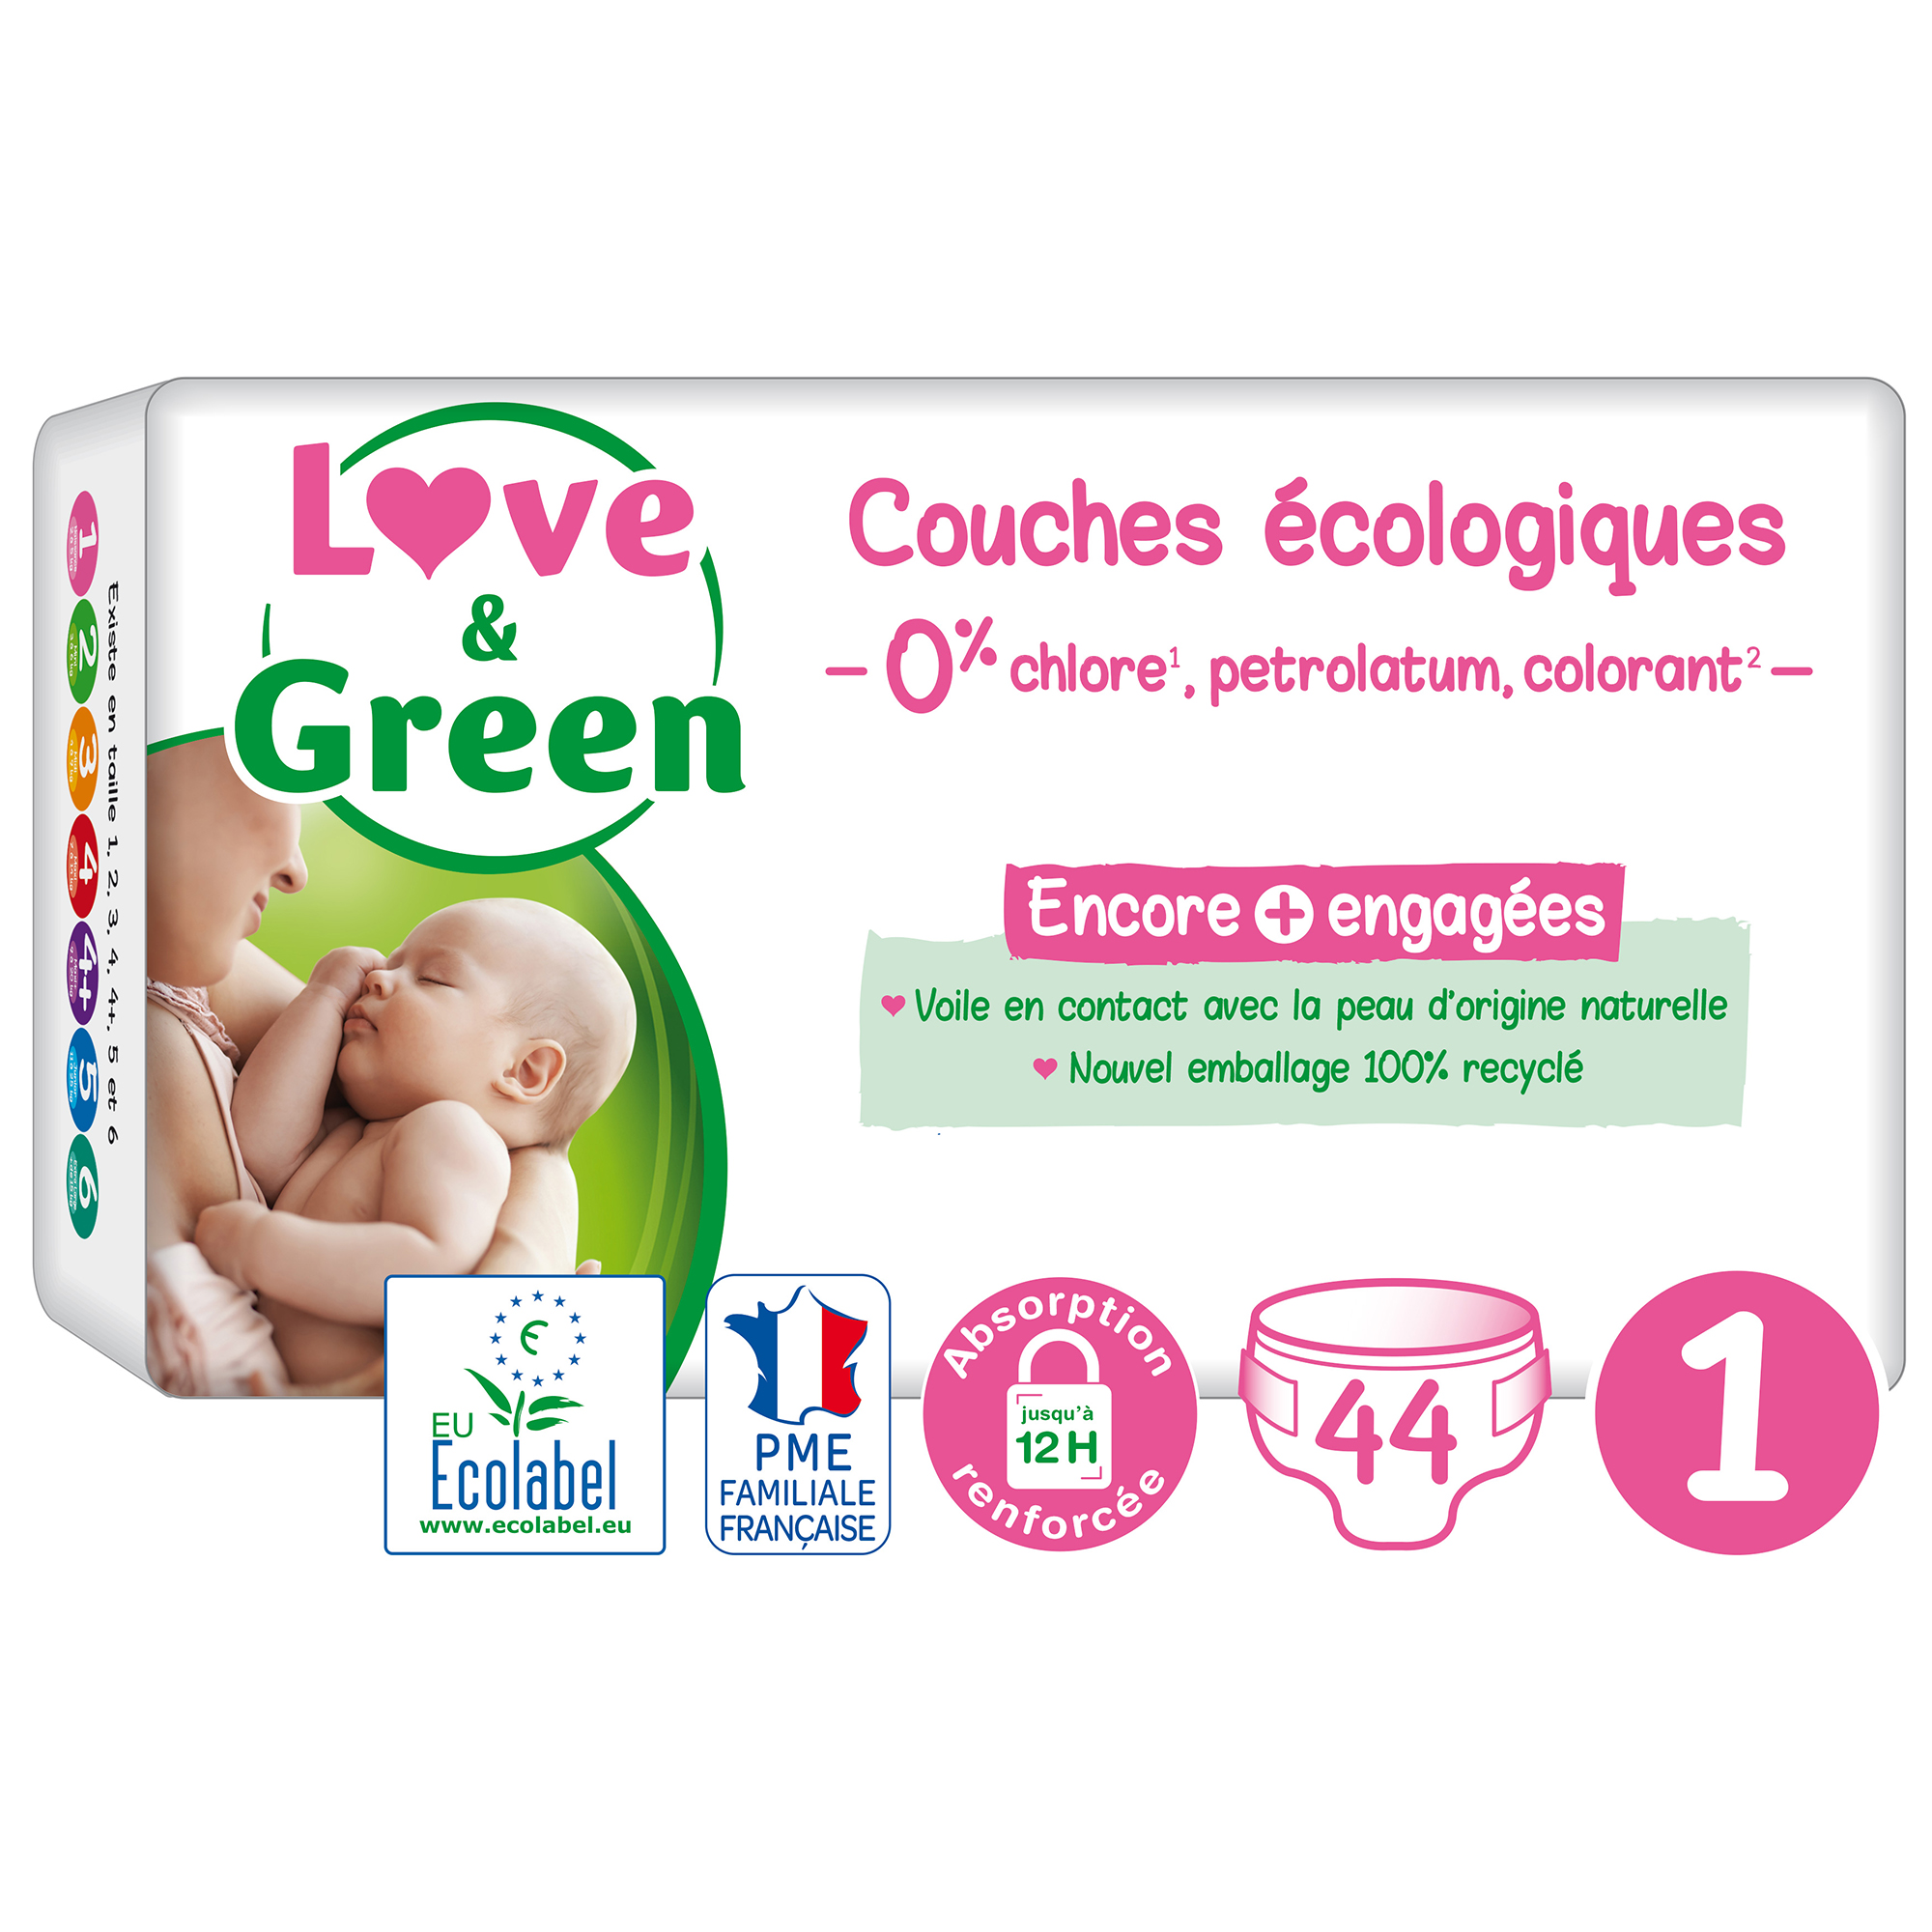 Love And Green Couches Hypoallergéniques Taille 3 4 à 9Kg Paquet